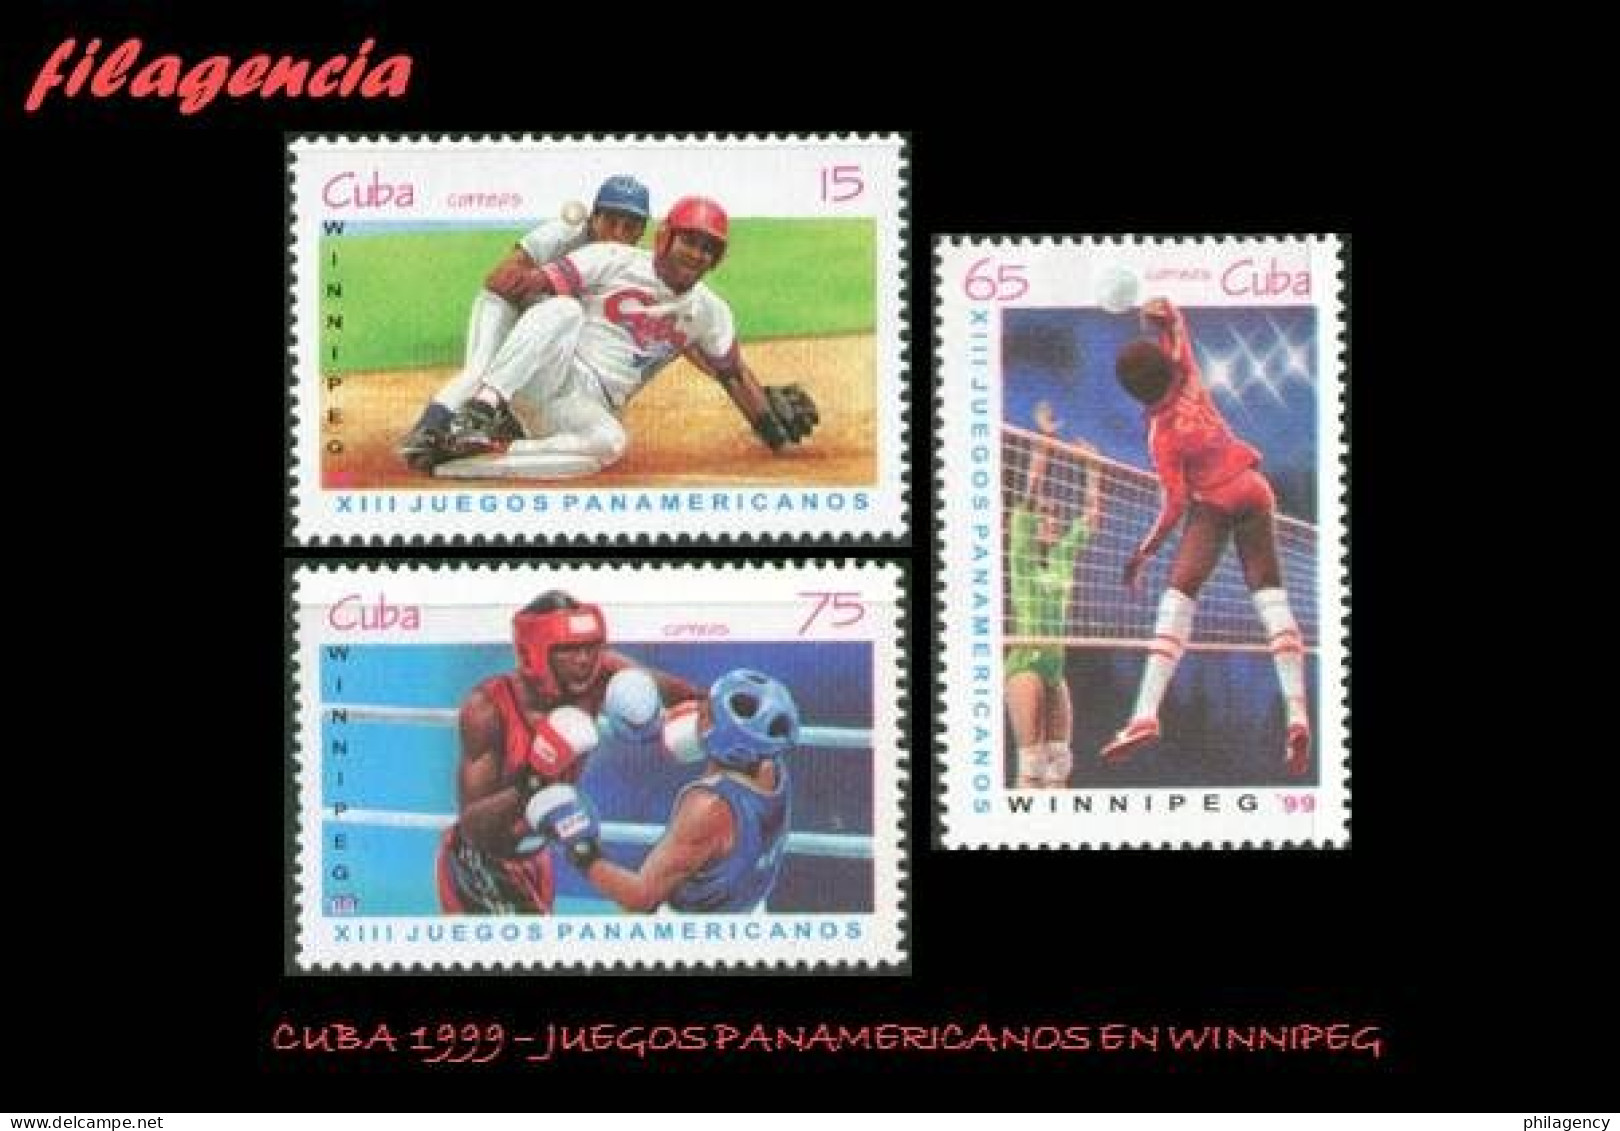 CUBA MINT. 1999-17 JUEGOS PANAMERICANOS EN WINNIPEG - Unused Stamps